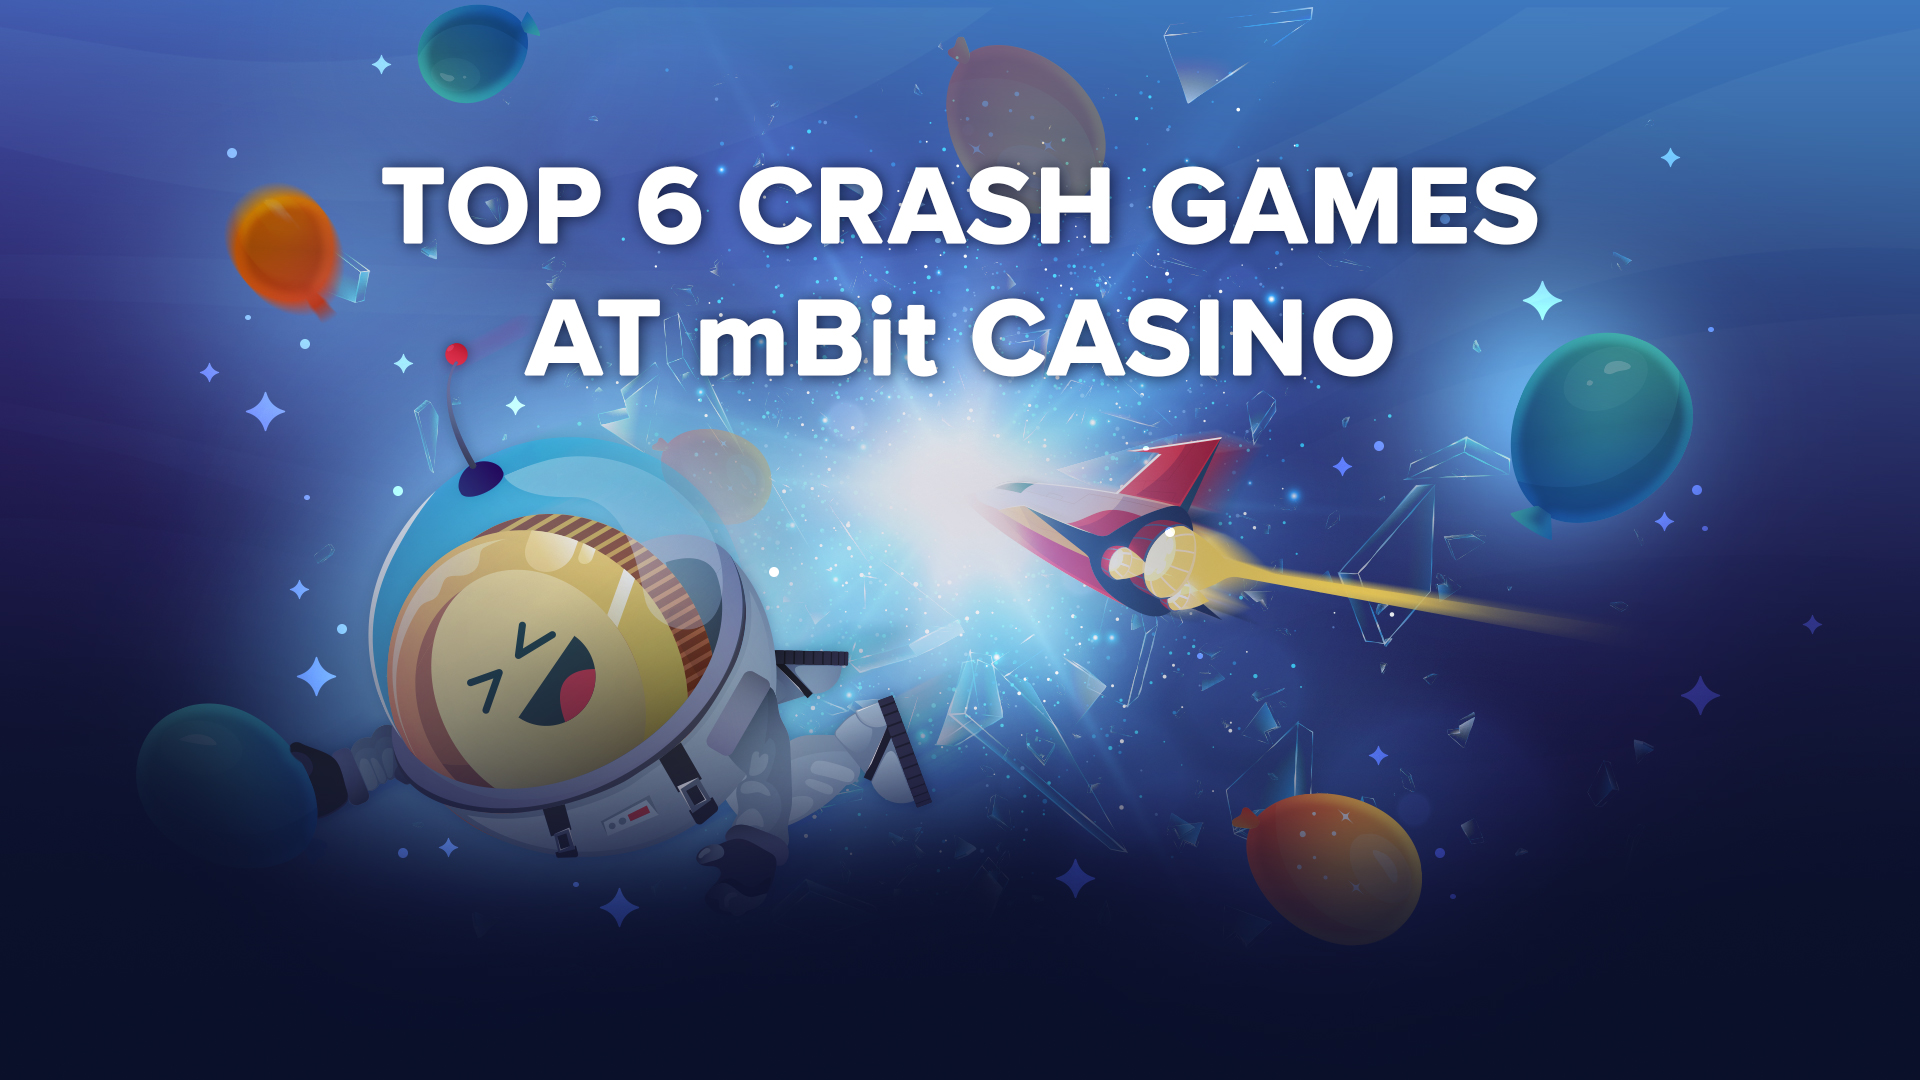 Crashino Offers 30+ Crash Gambling Games - Easy Reader News